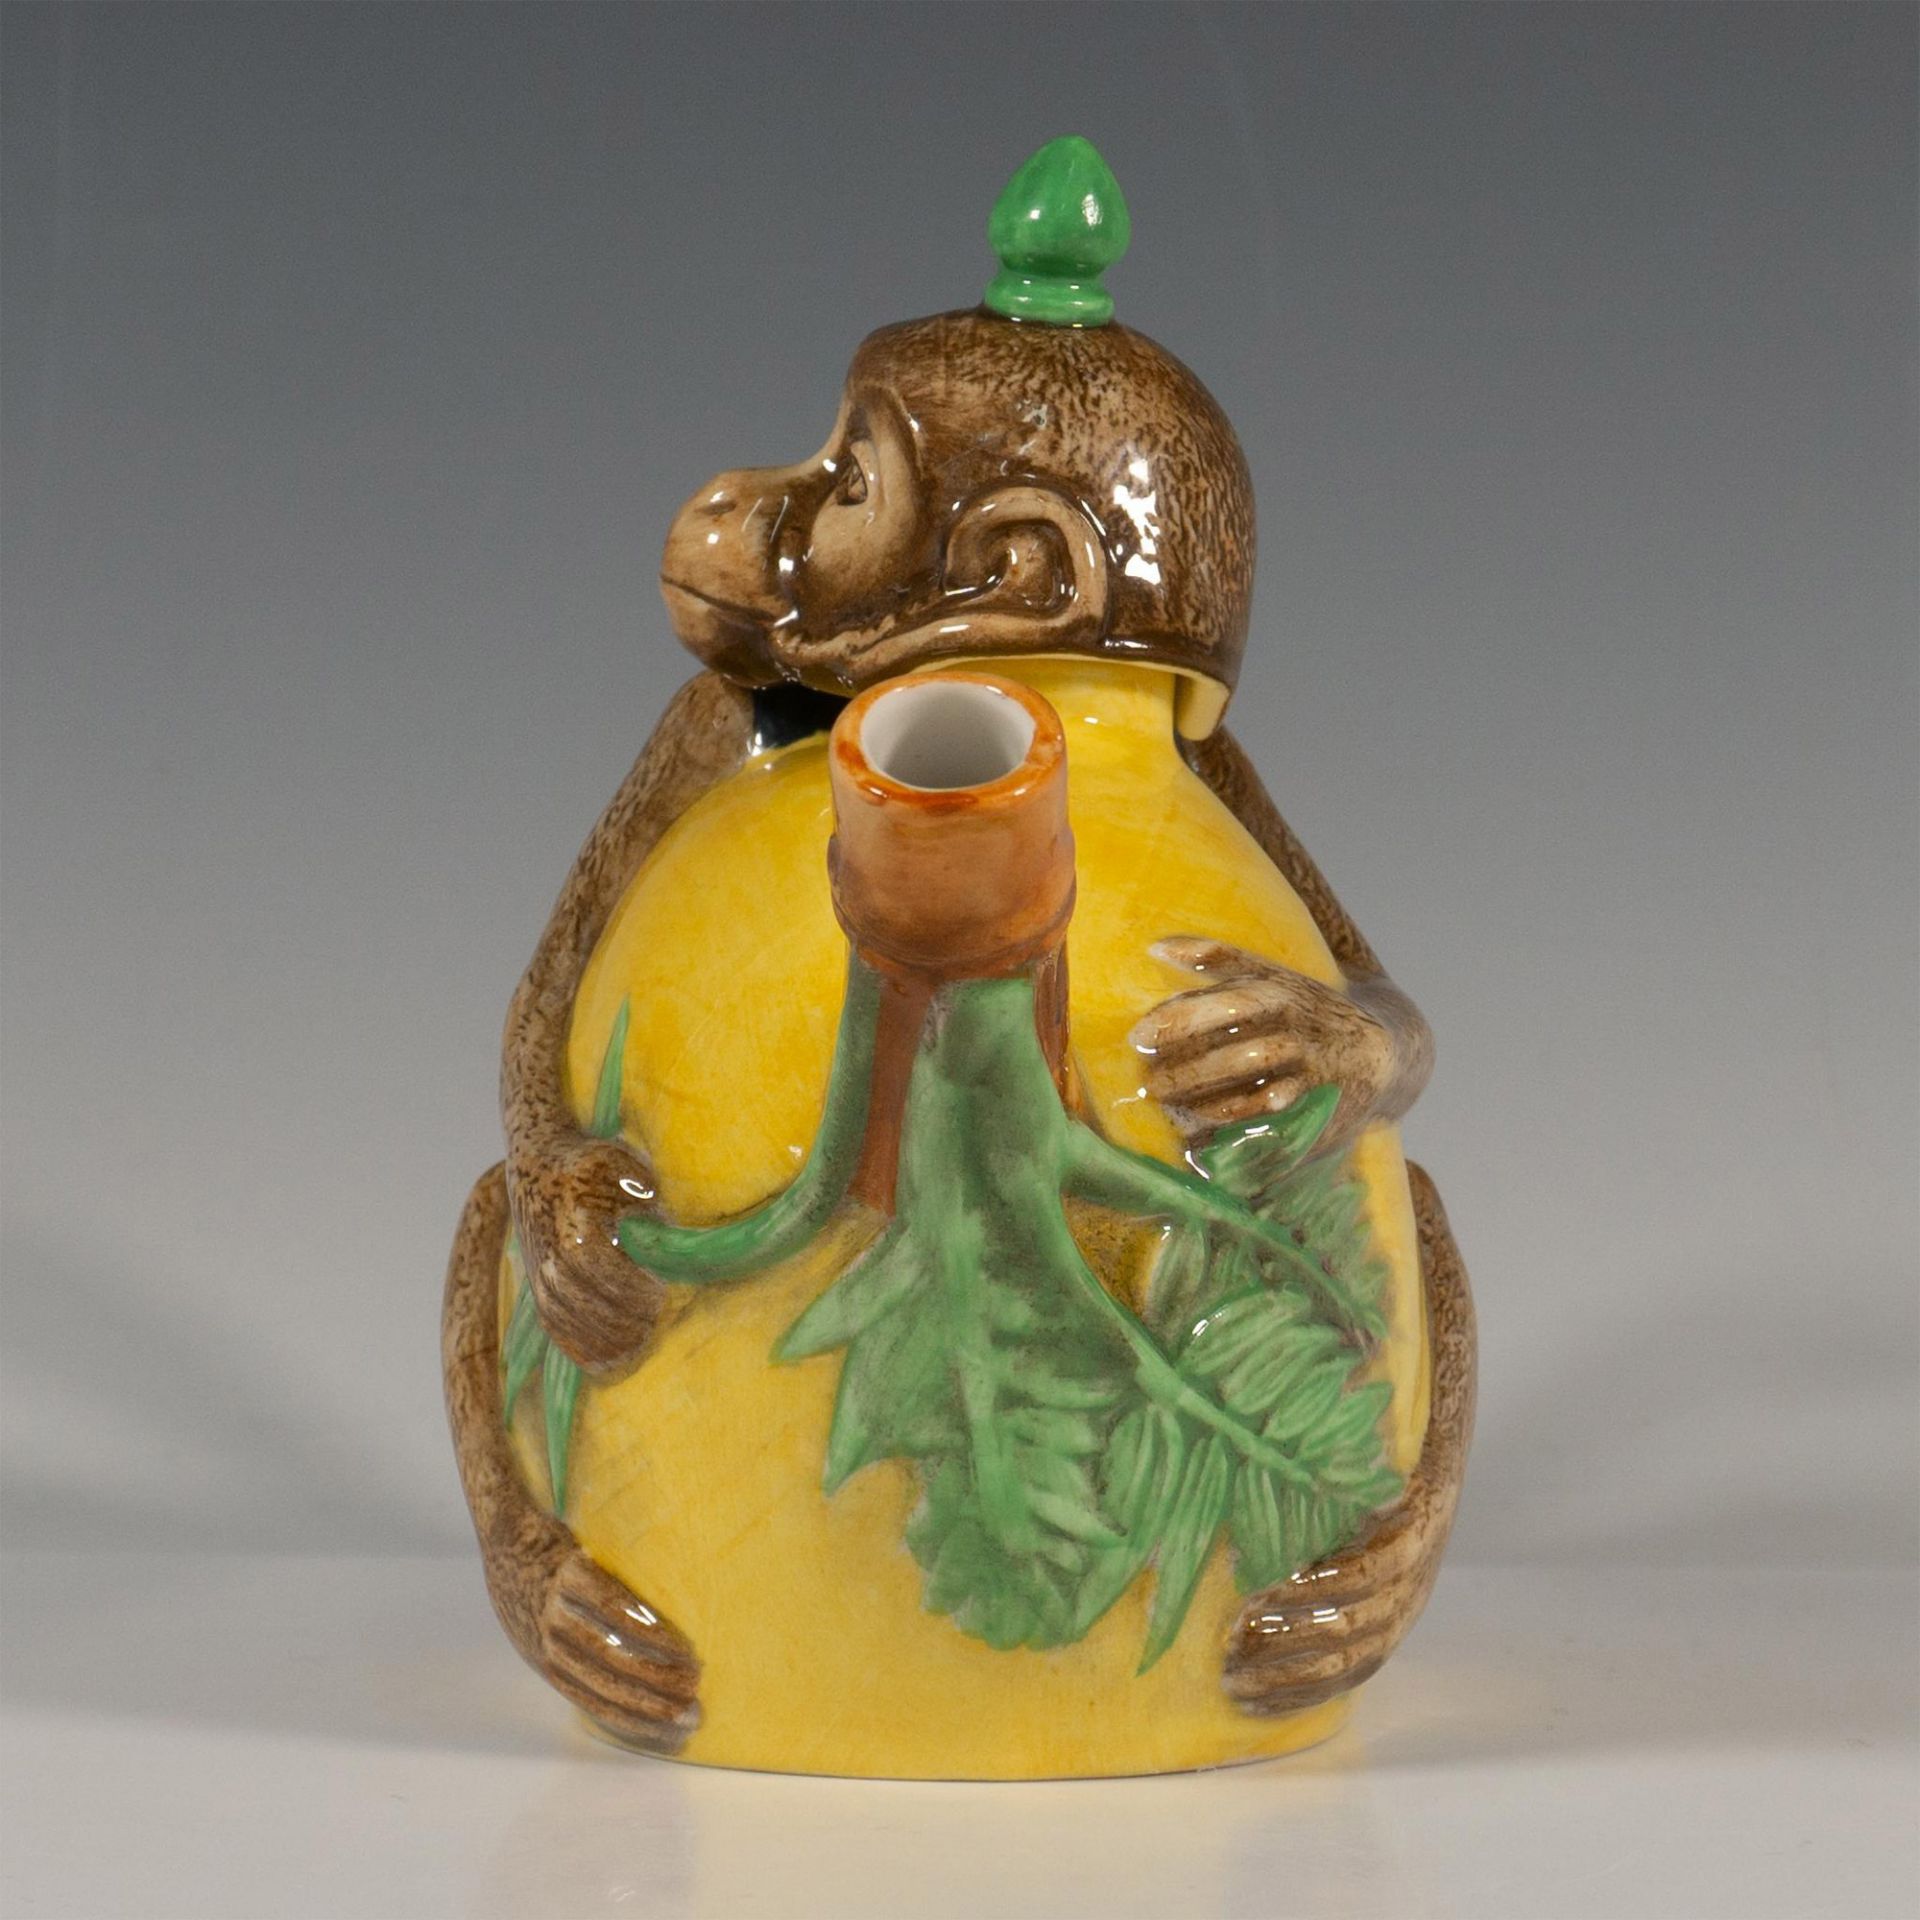 Royal Doulton Minton Archive Collection, Monkey Teapot - Image 2 of 6